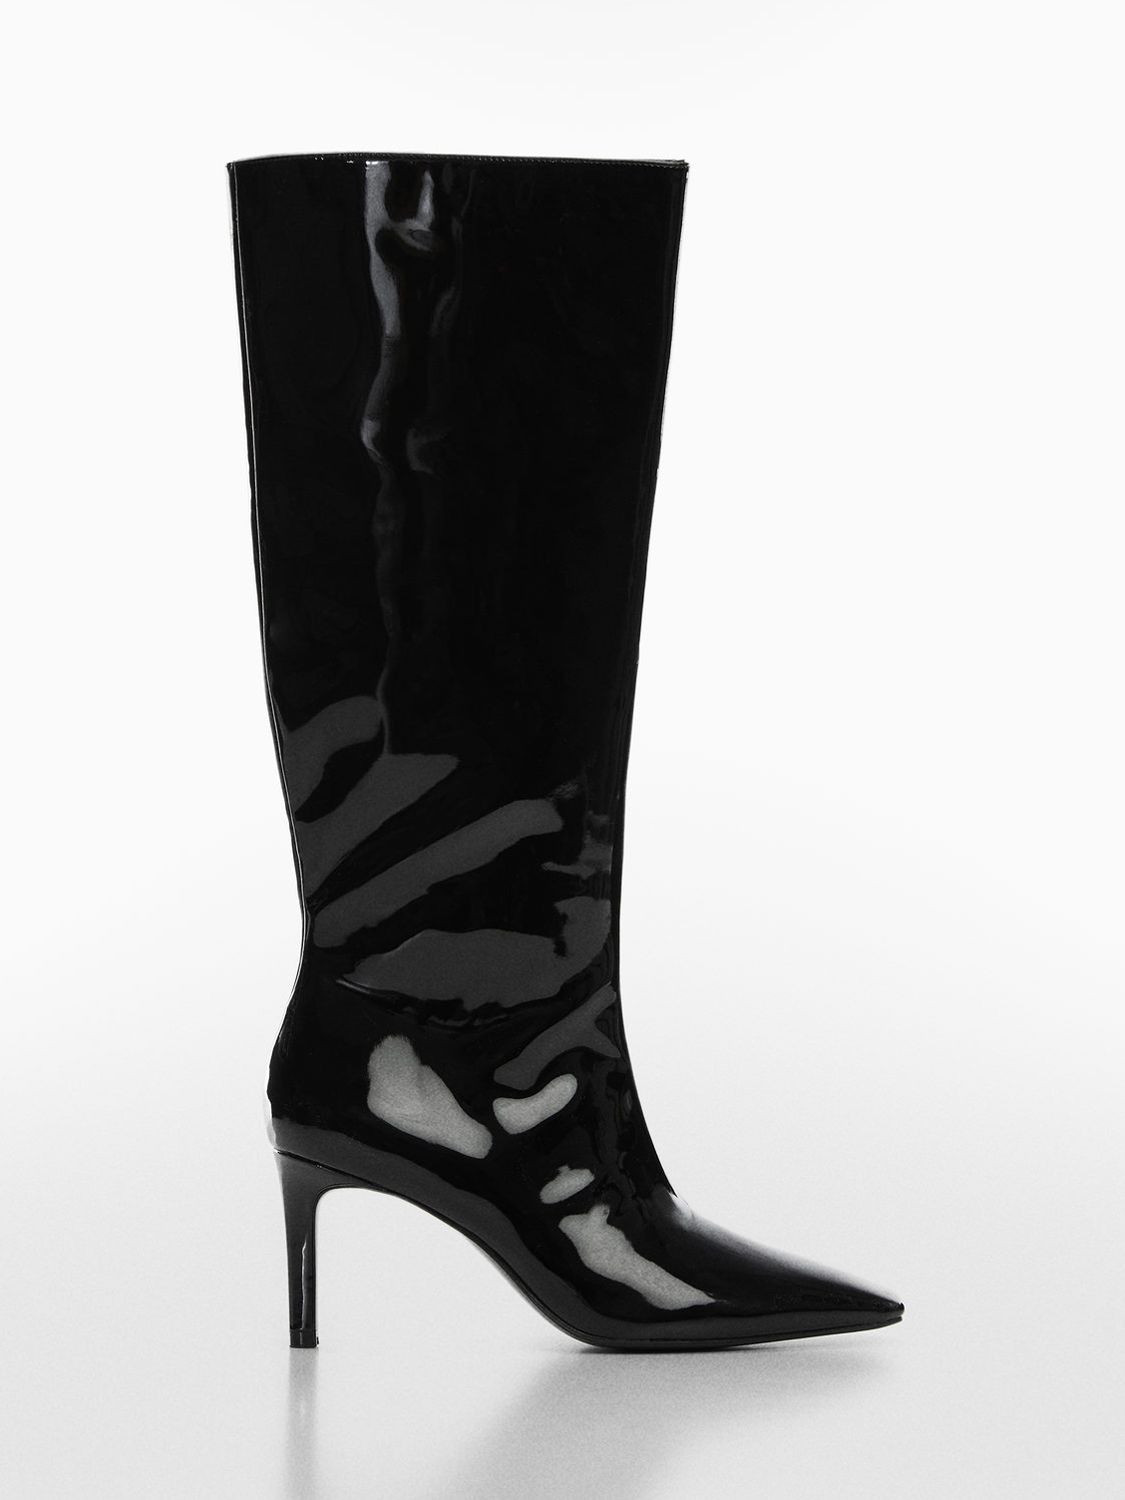 Mango Aqua Patent Leather Knee Length Boots, Black at John Lewis & Partners